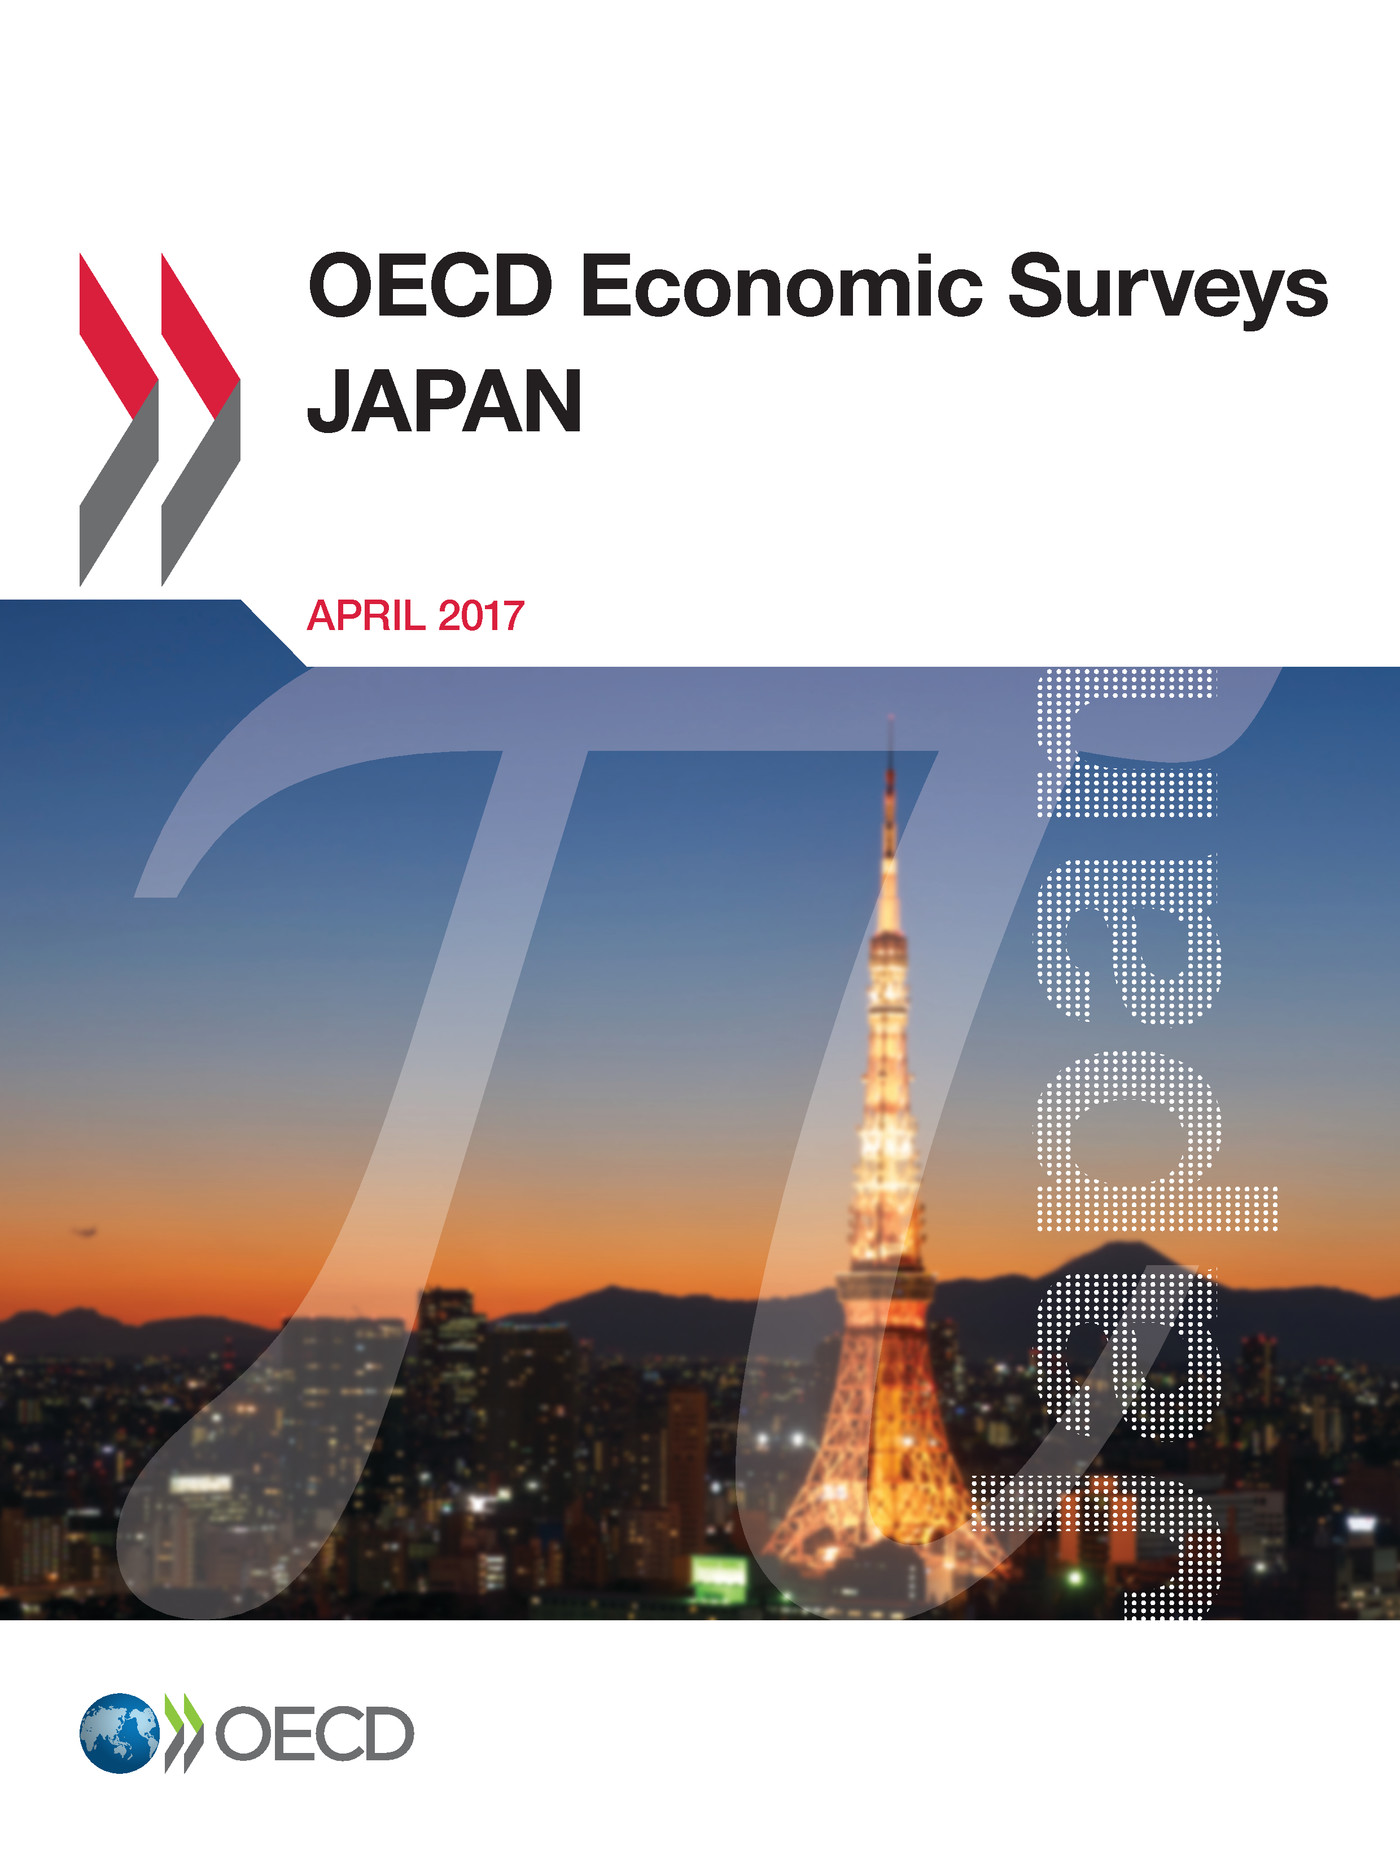 OECD Economic Surveys: Japan 2017 -  Collectif - OCDE / OECD